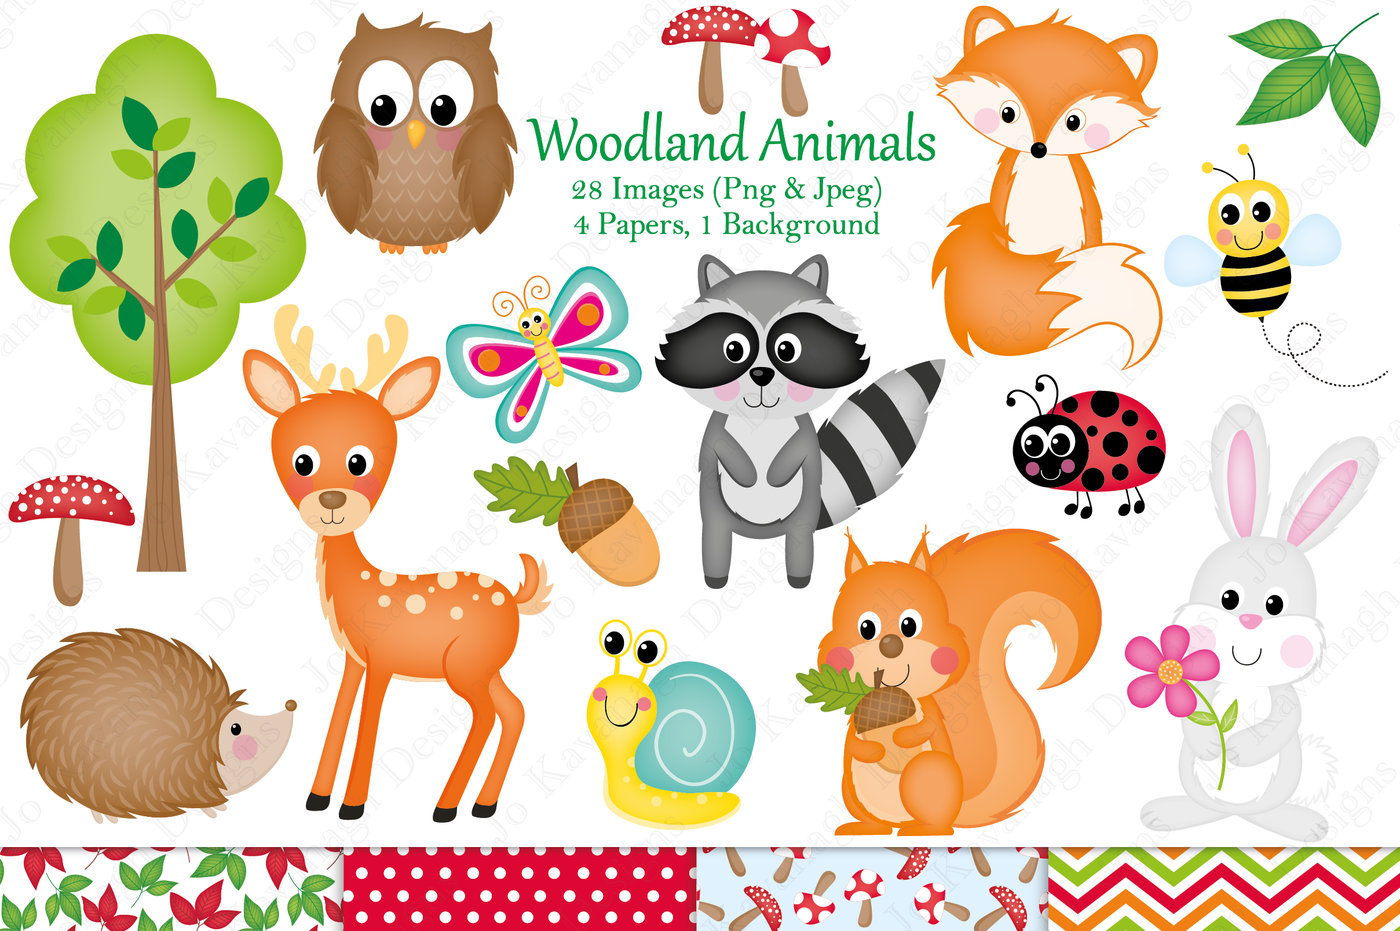 Woodland animals clipart,Woodland animal graphics